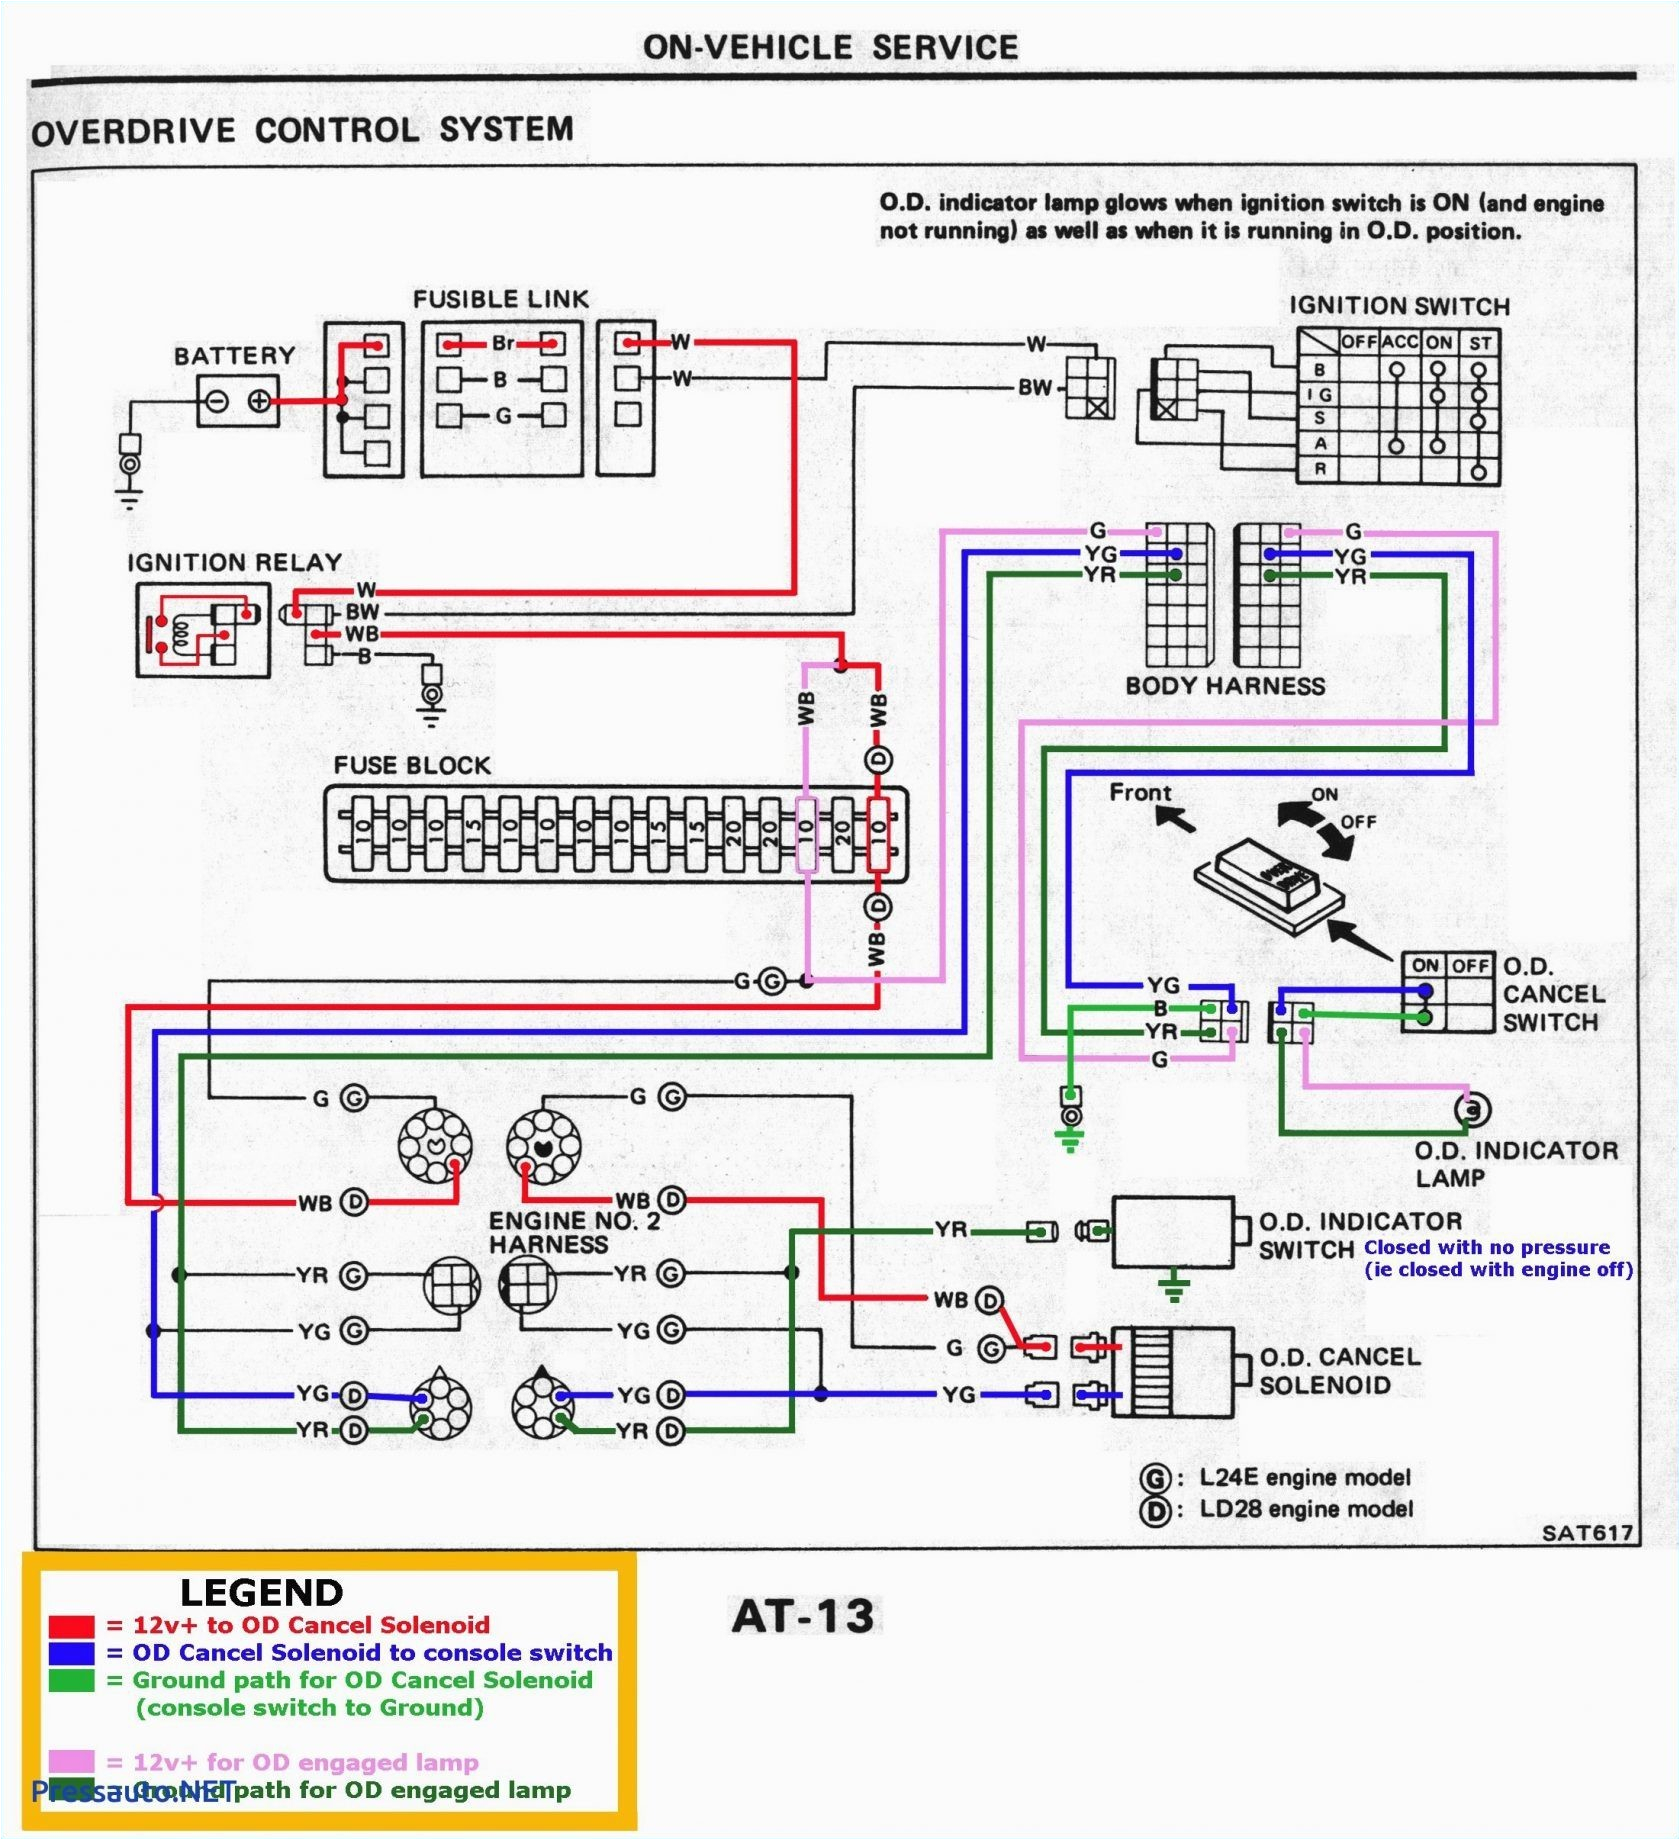 buckley wiring diagrams data schematic diagram buckley wiring diagrams